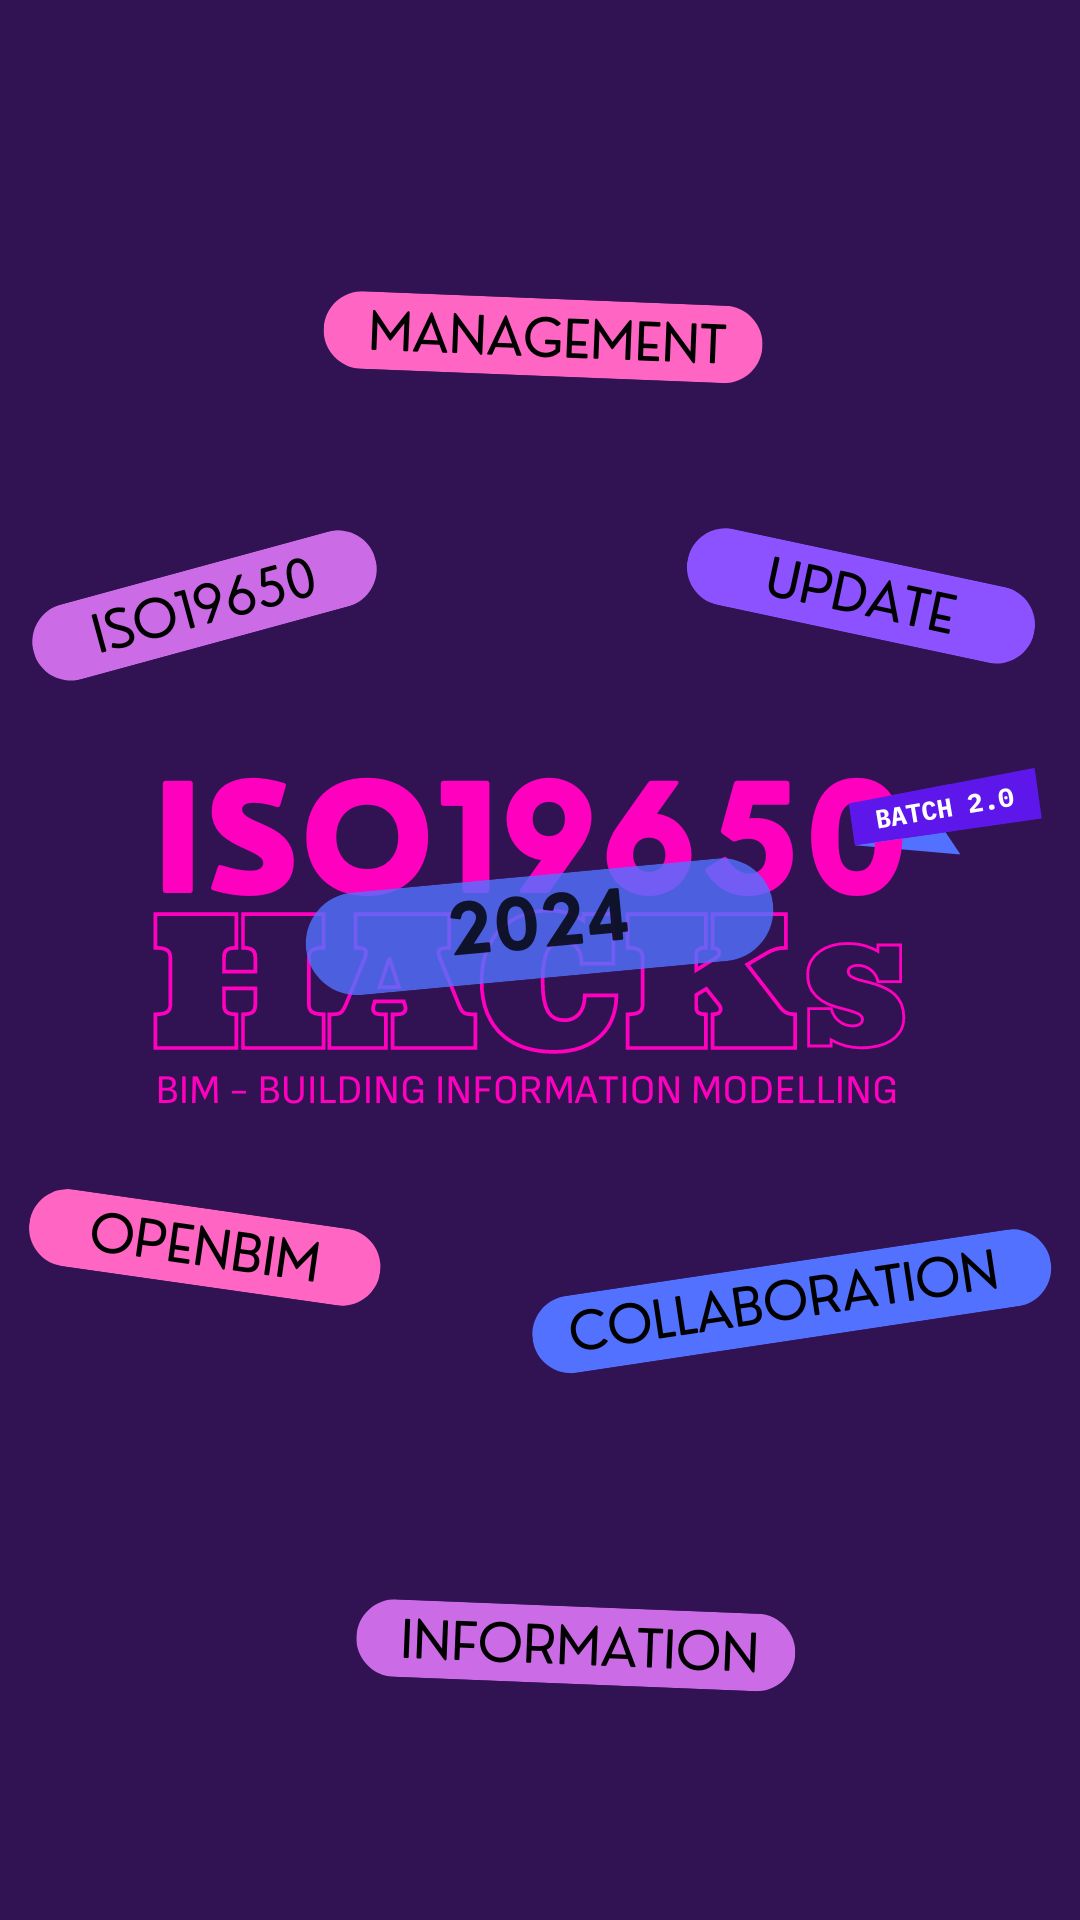 ISO19650 HACKs - BIM (Building Information Modelling) - BATCH02 2024